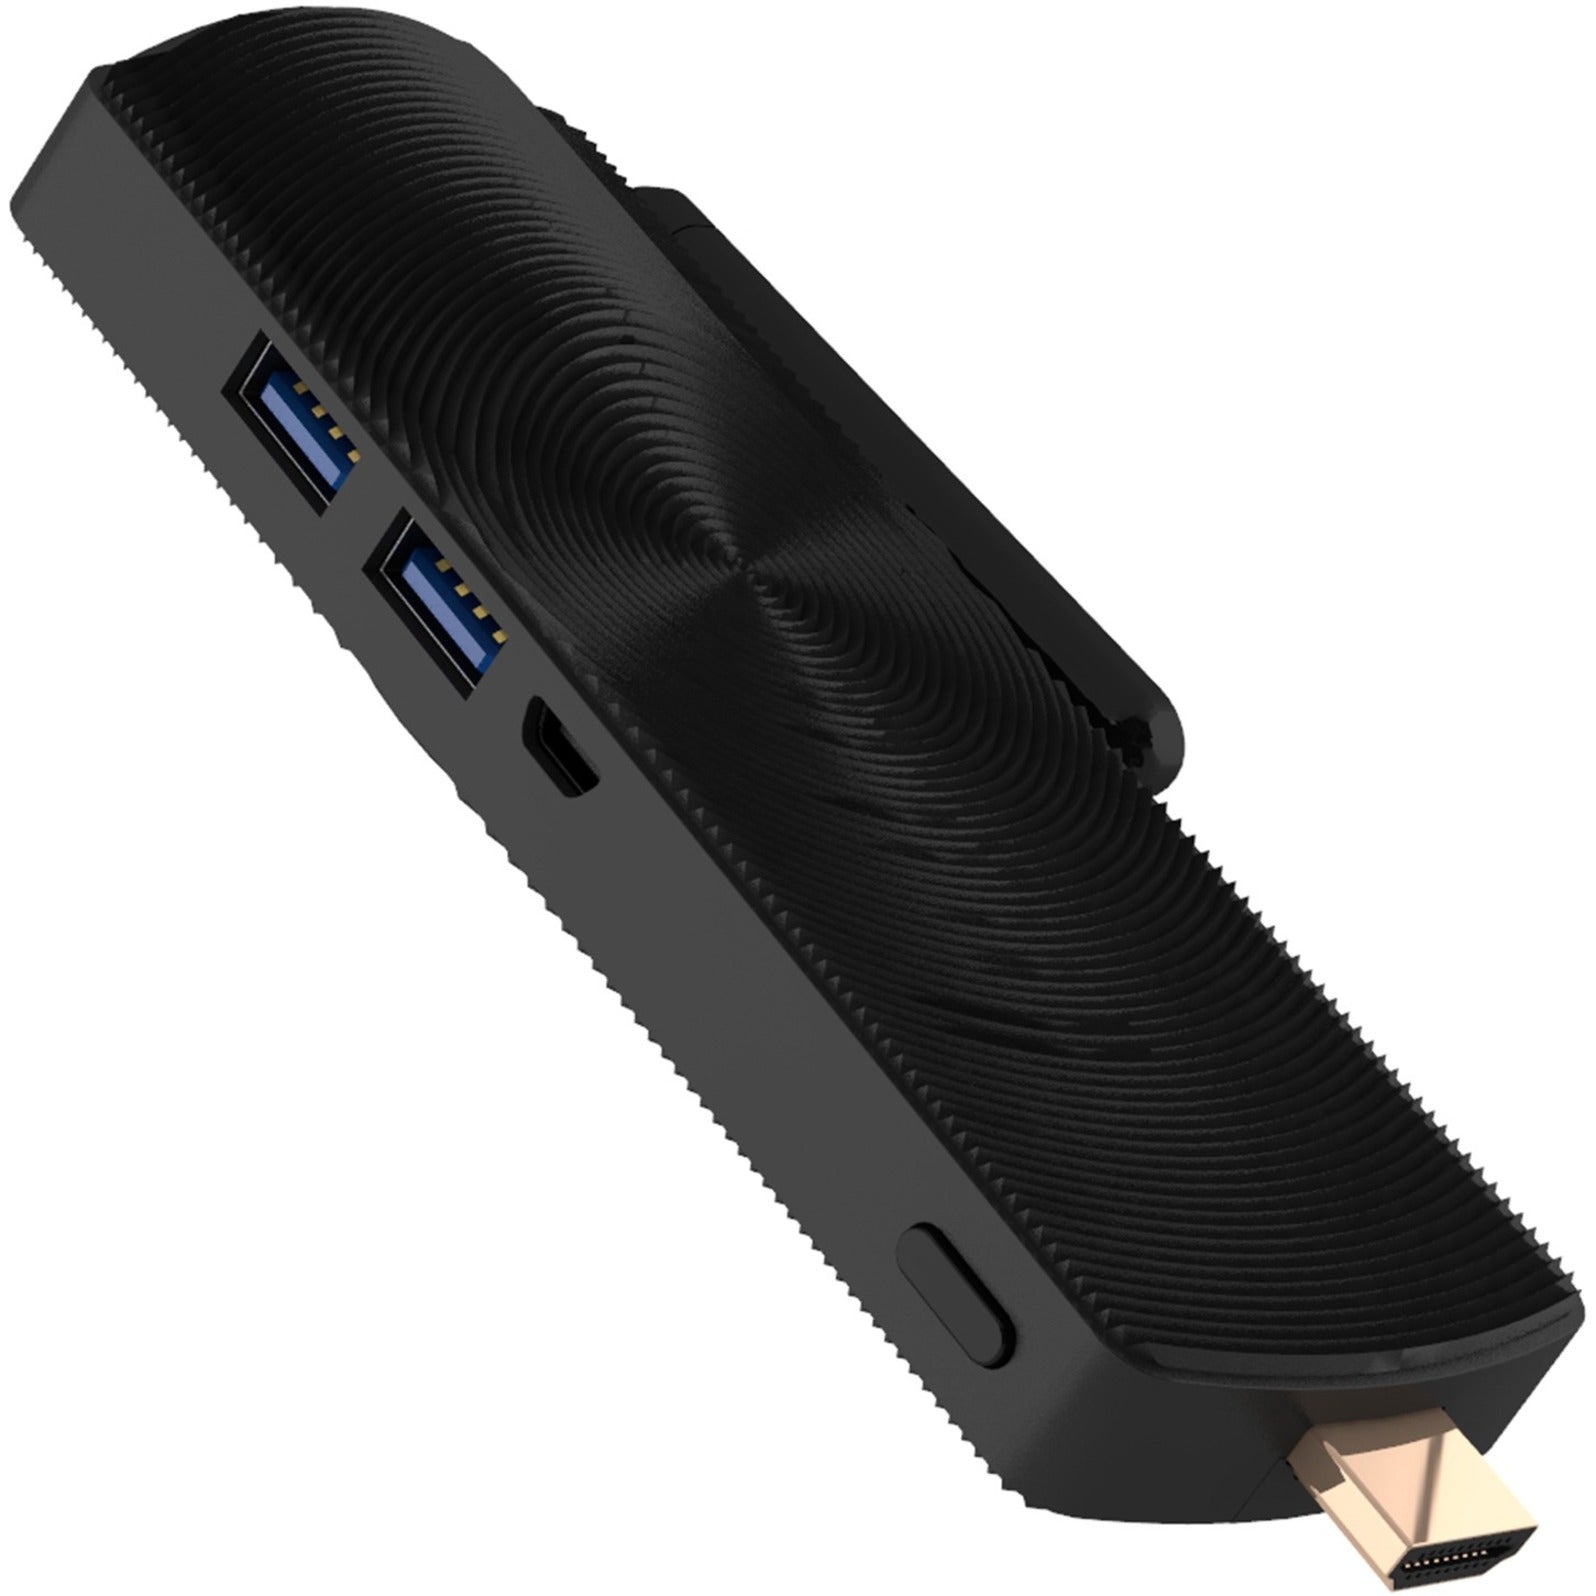 Azulle AA1222 Access4 Essential Mini PC Stick with Windows 10 IoT, 4GB RAM, 64GB Storage, HDMI, Gigabit Ethernet